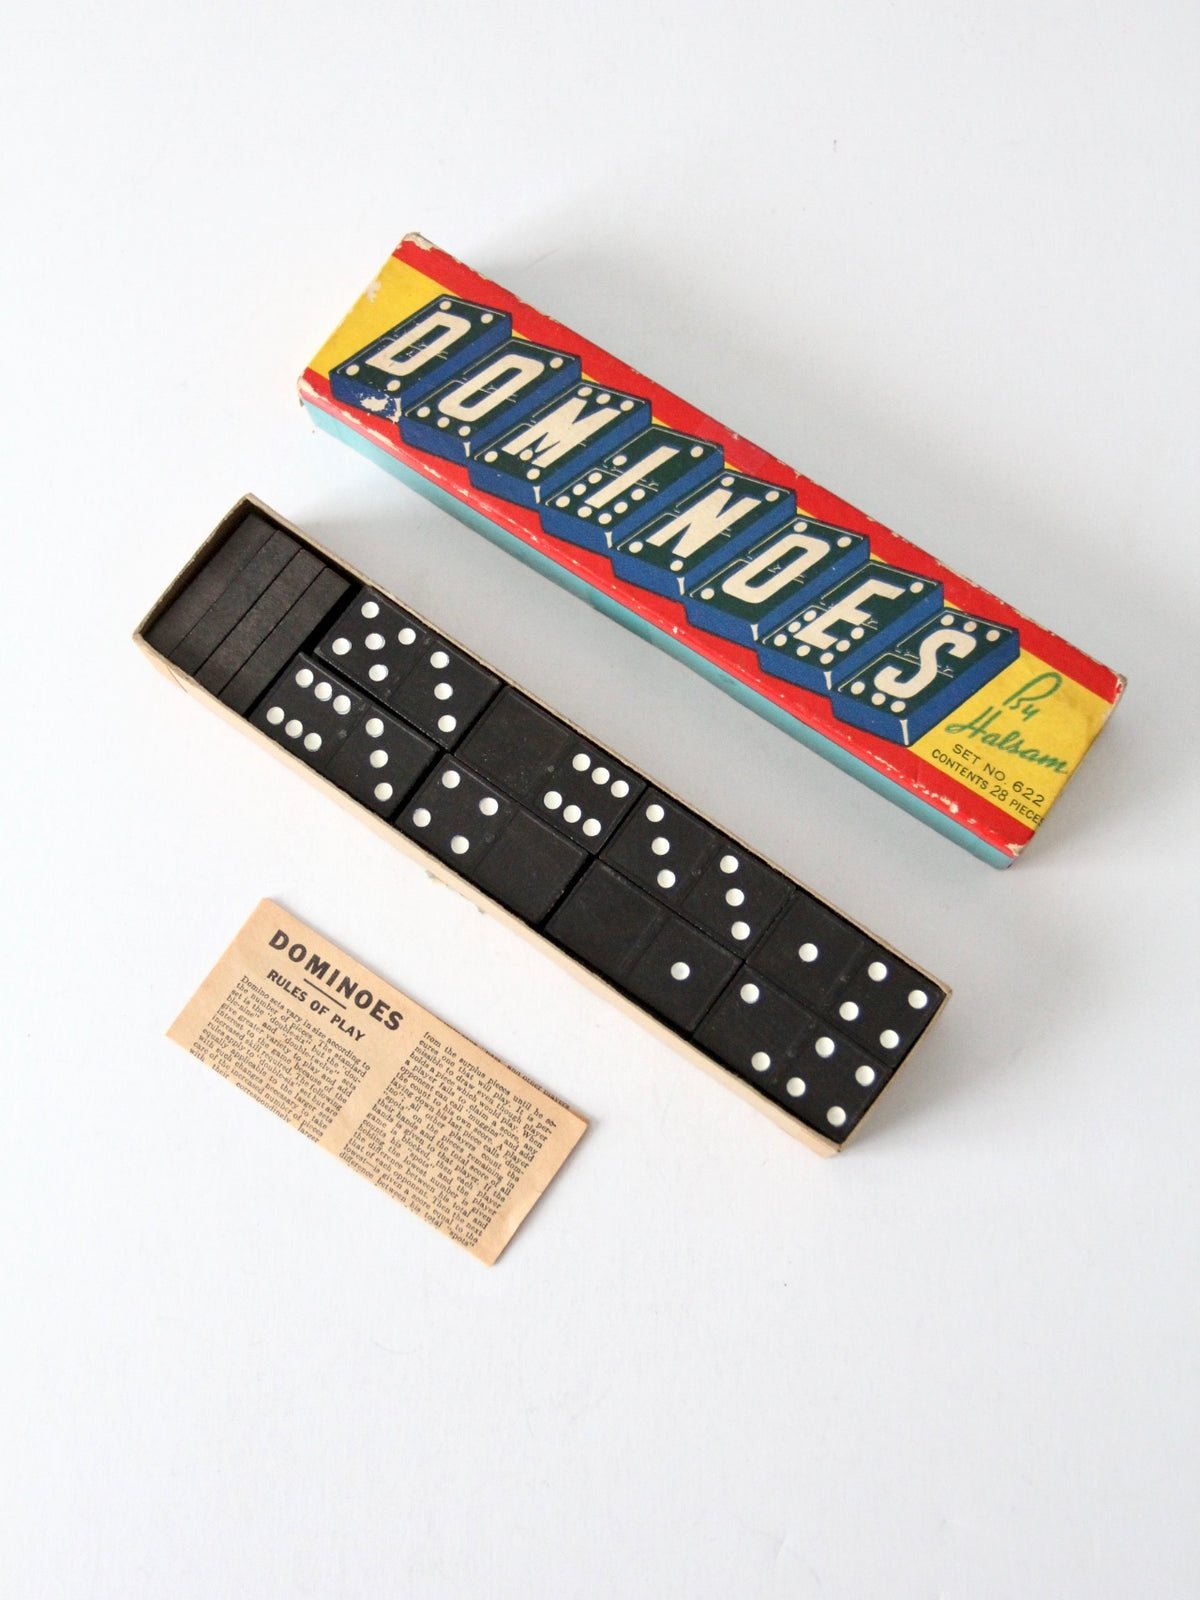 Halsam dominoes circa 1950s